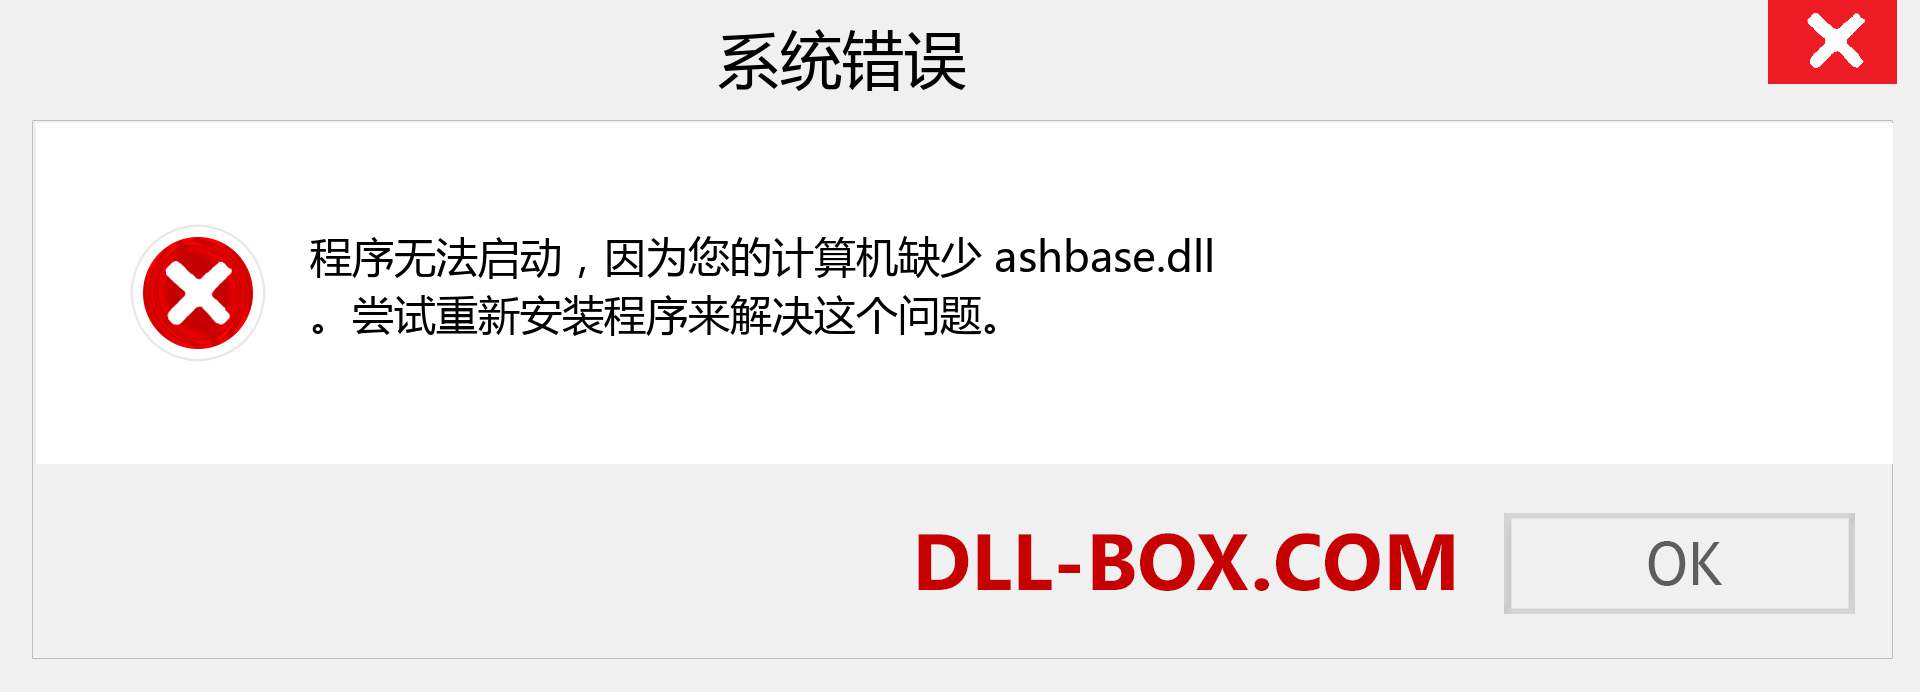 ashbase.dll 文件丢失？。 适用于 Windows 7、8、10 的下载 - 修复 Windows、照片、图像上的 ashbase dll 丢失错误